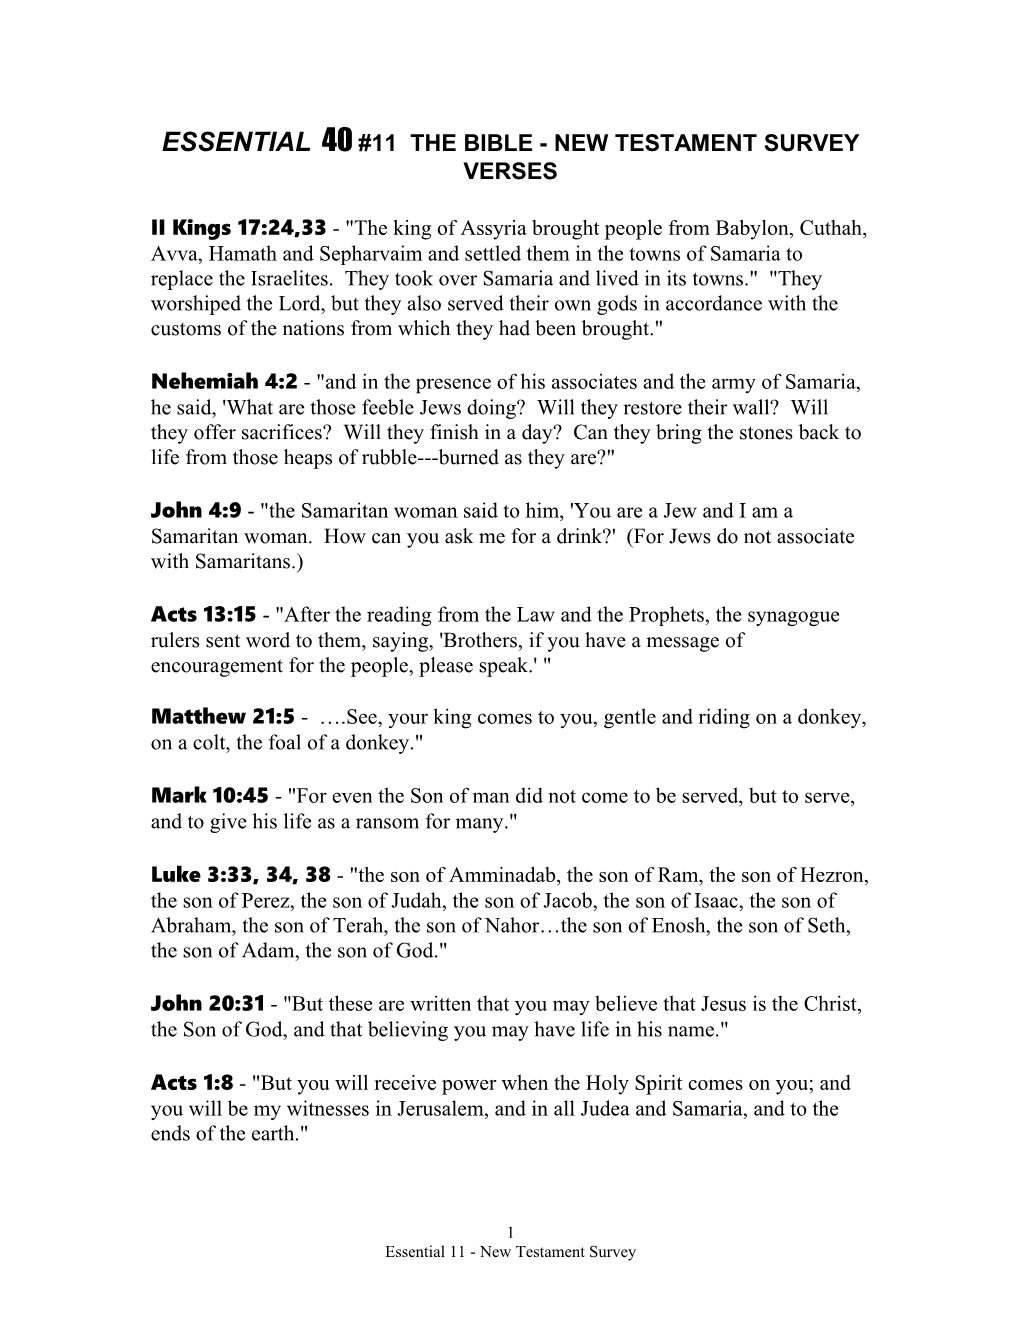 Essential 40 #11 the Bible - New Testament Survey